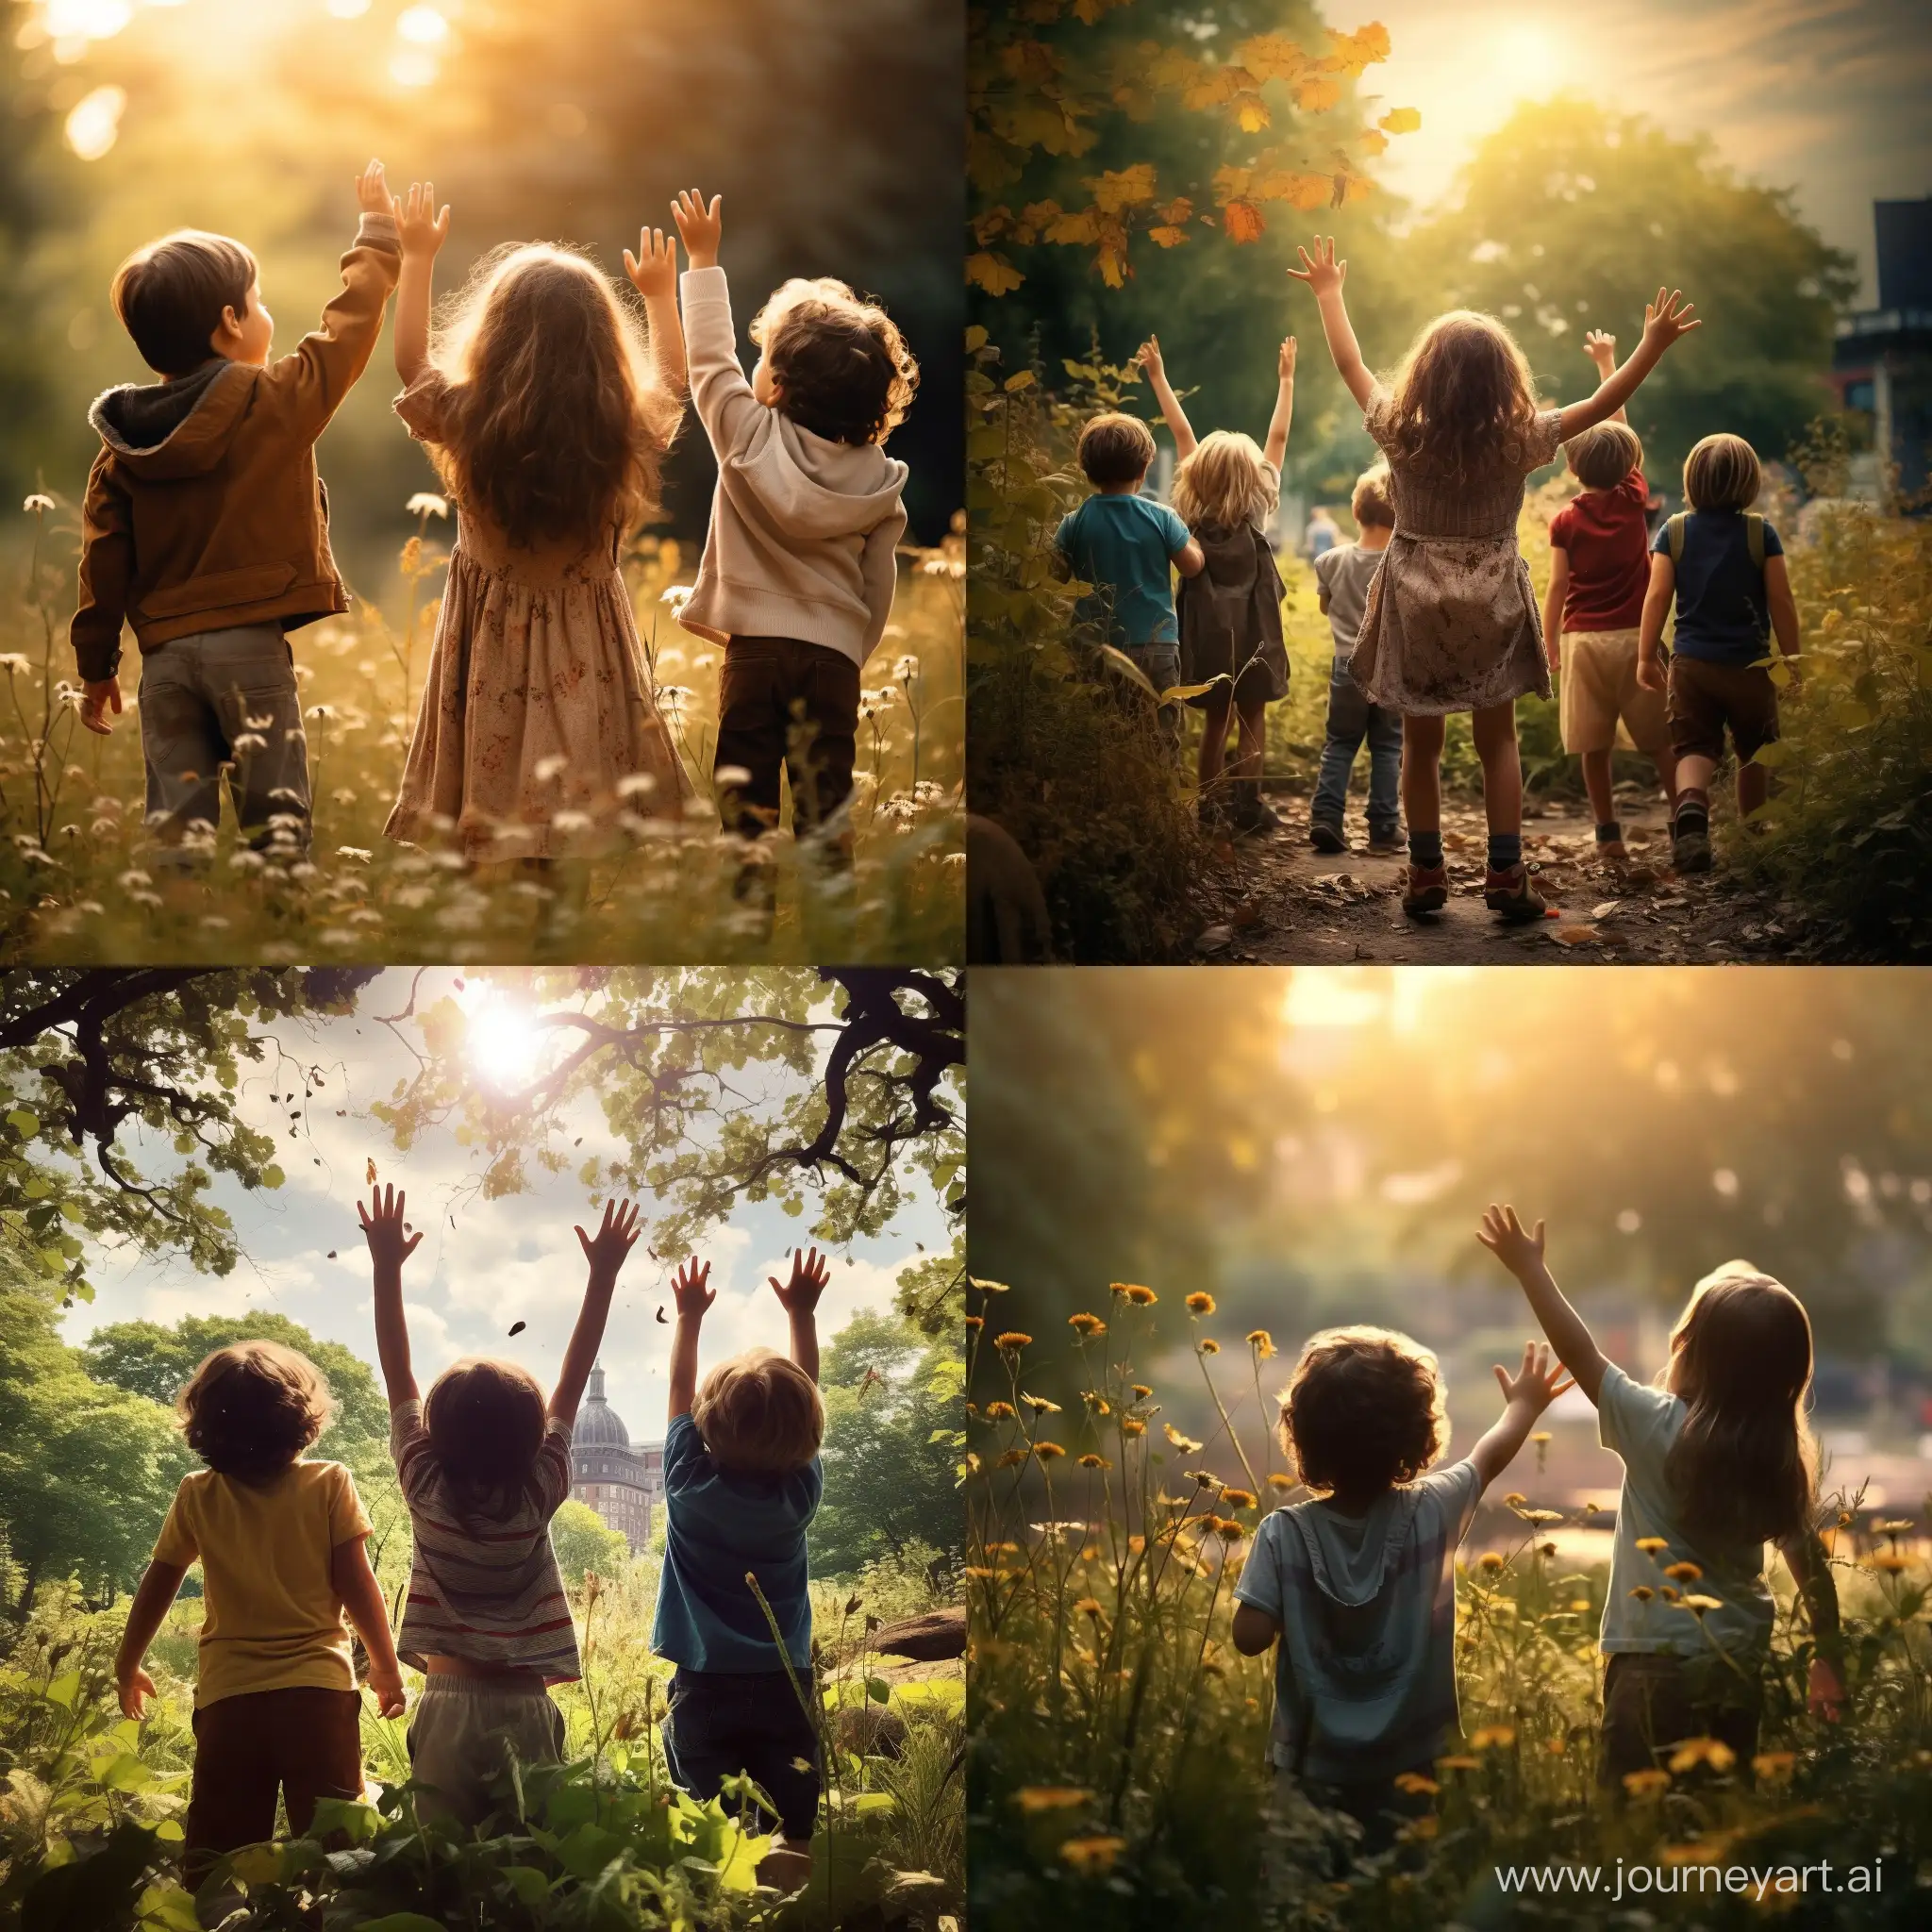 Joyful-Children-Embracing-Nature-in-the-Park